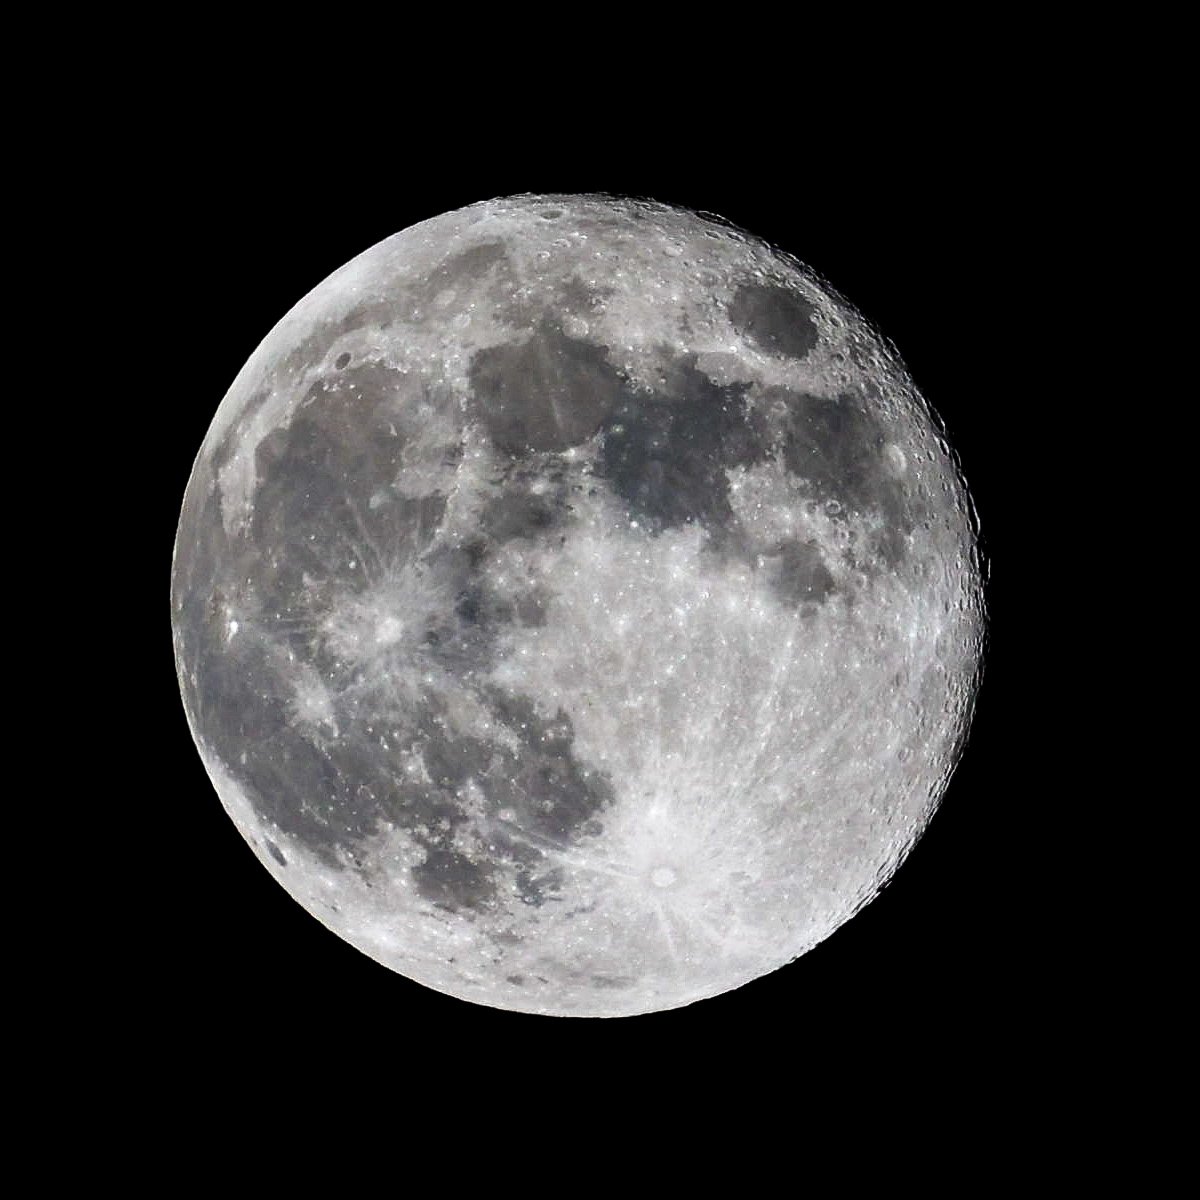 Last night's moon shot with my @CanonUKandIE R6 and @SigmaImagingUK 150-600, handheld in my back garden. #moon #FullMoon @ThePhotoHour